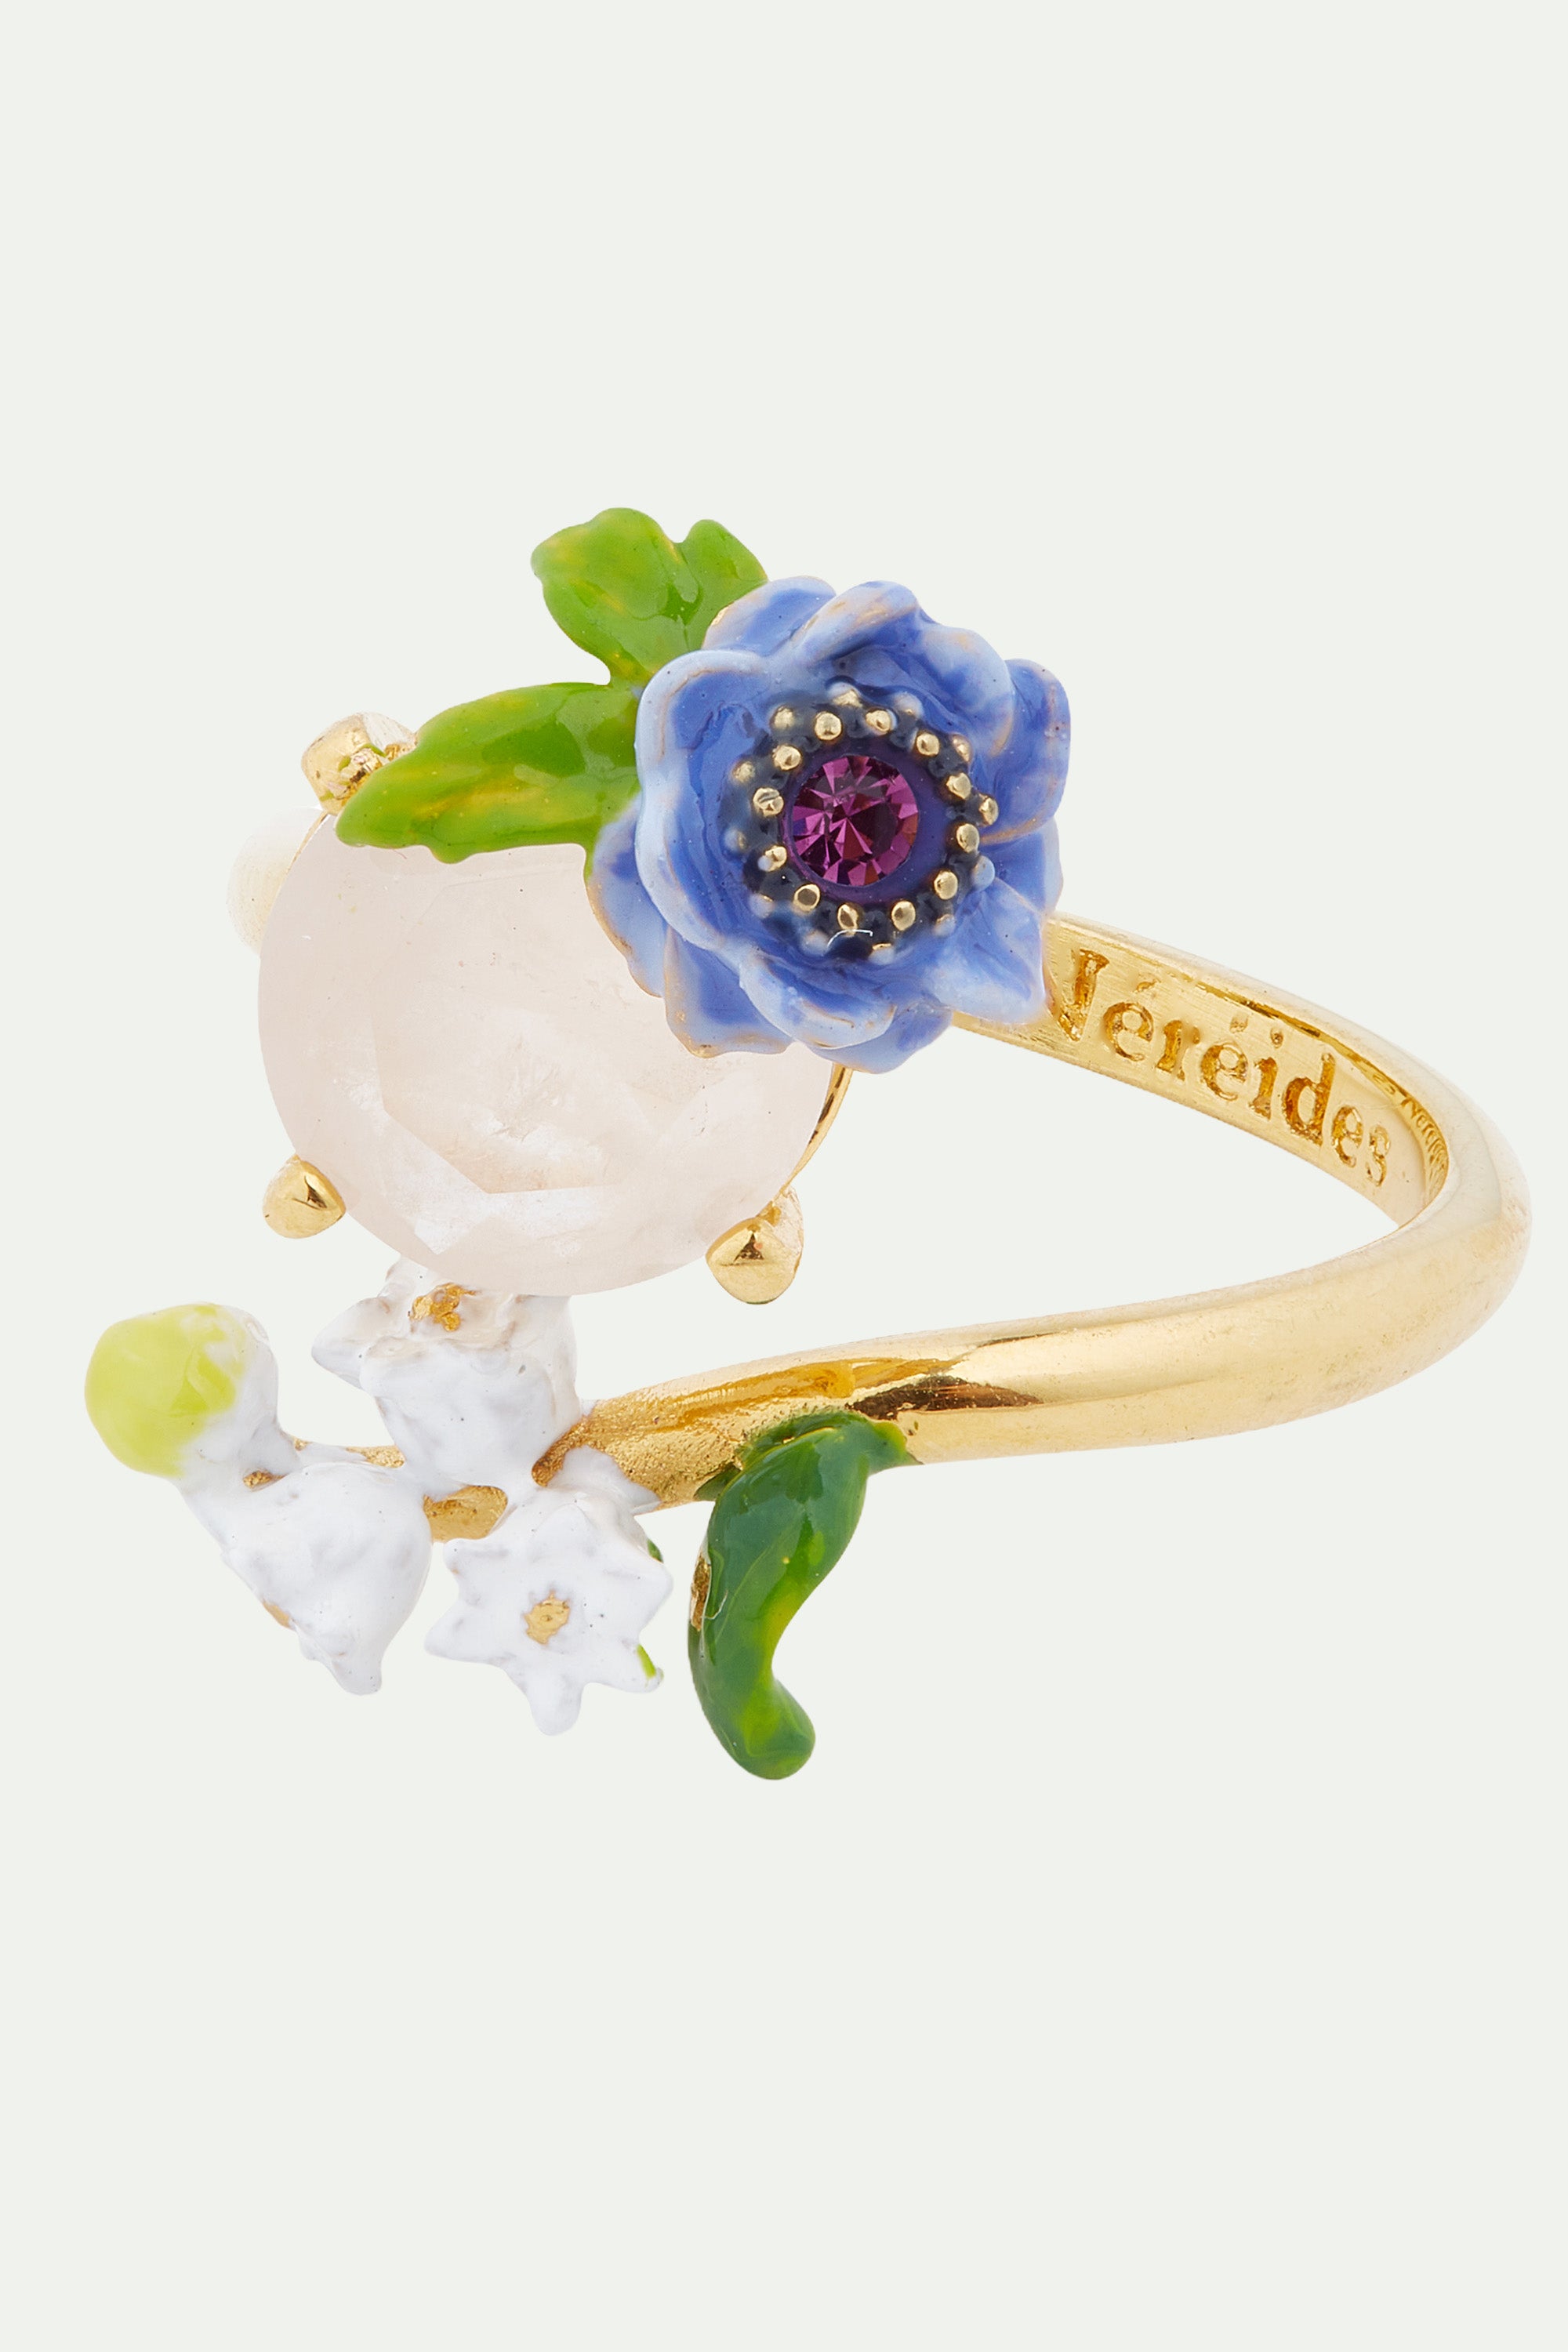 Rose quartz and floral composition adjustable ring